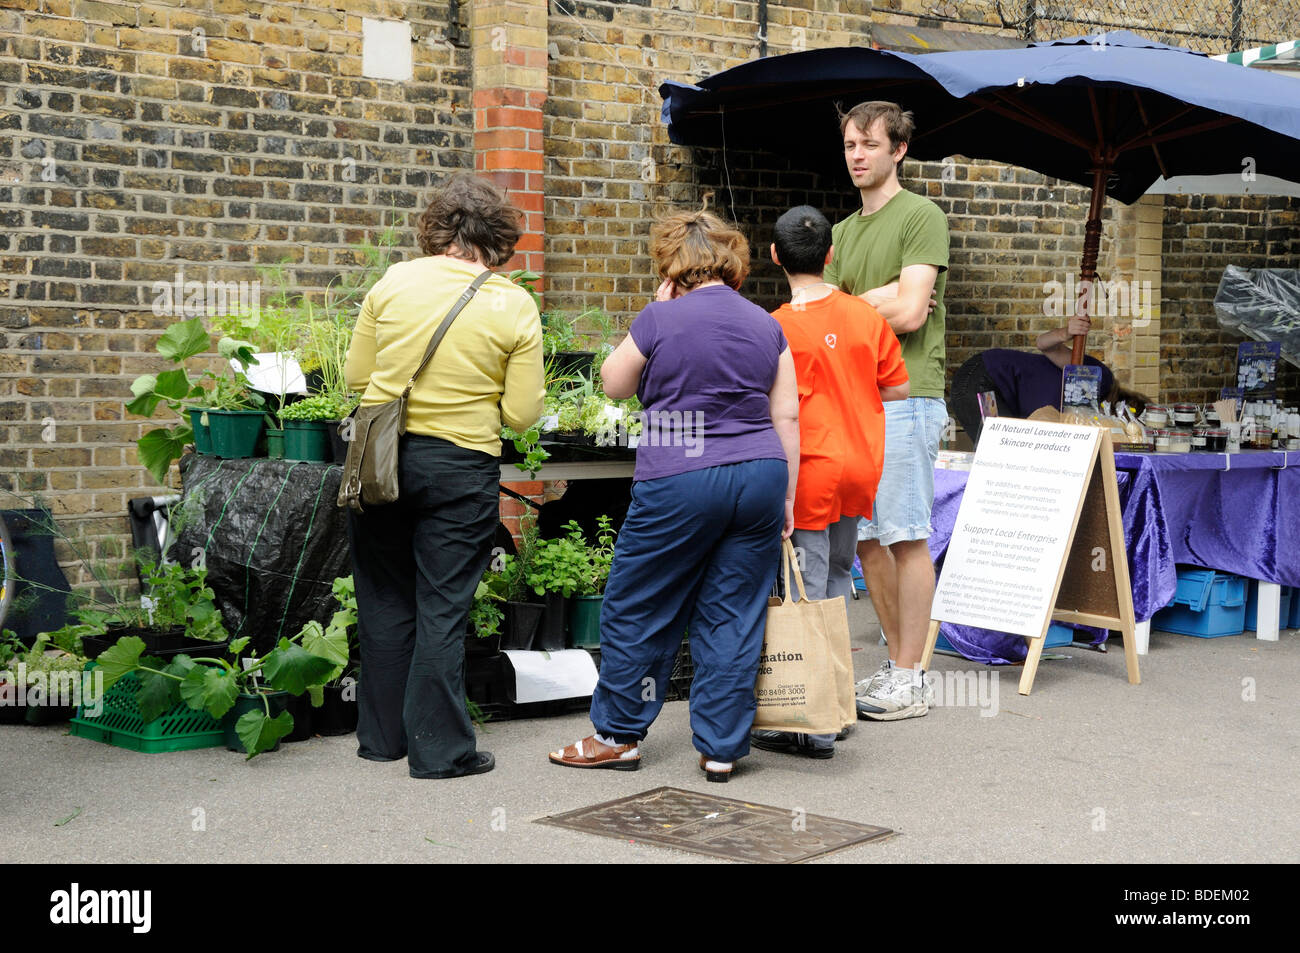 People at herb stall Church Street, Stoke Newington Farmers Market London Borough of Hackney England UK Stock Photo